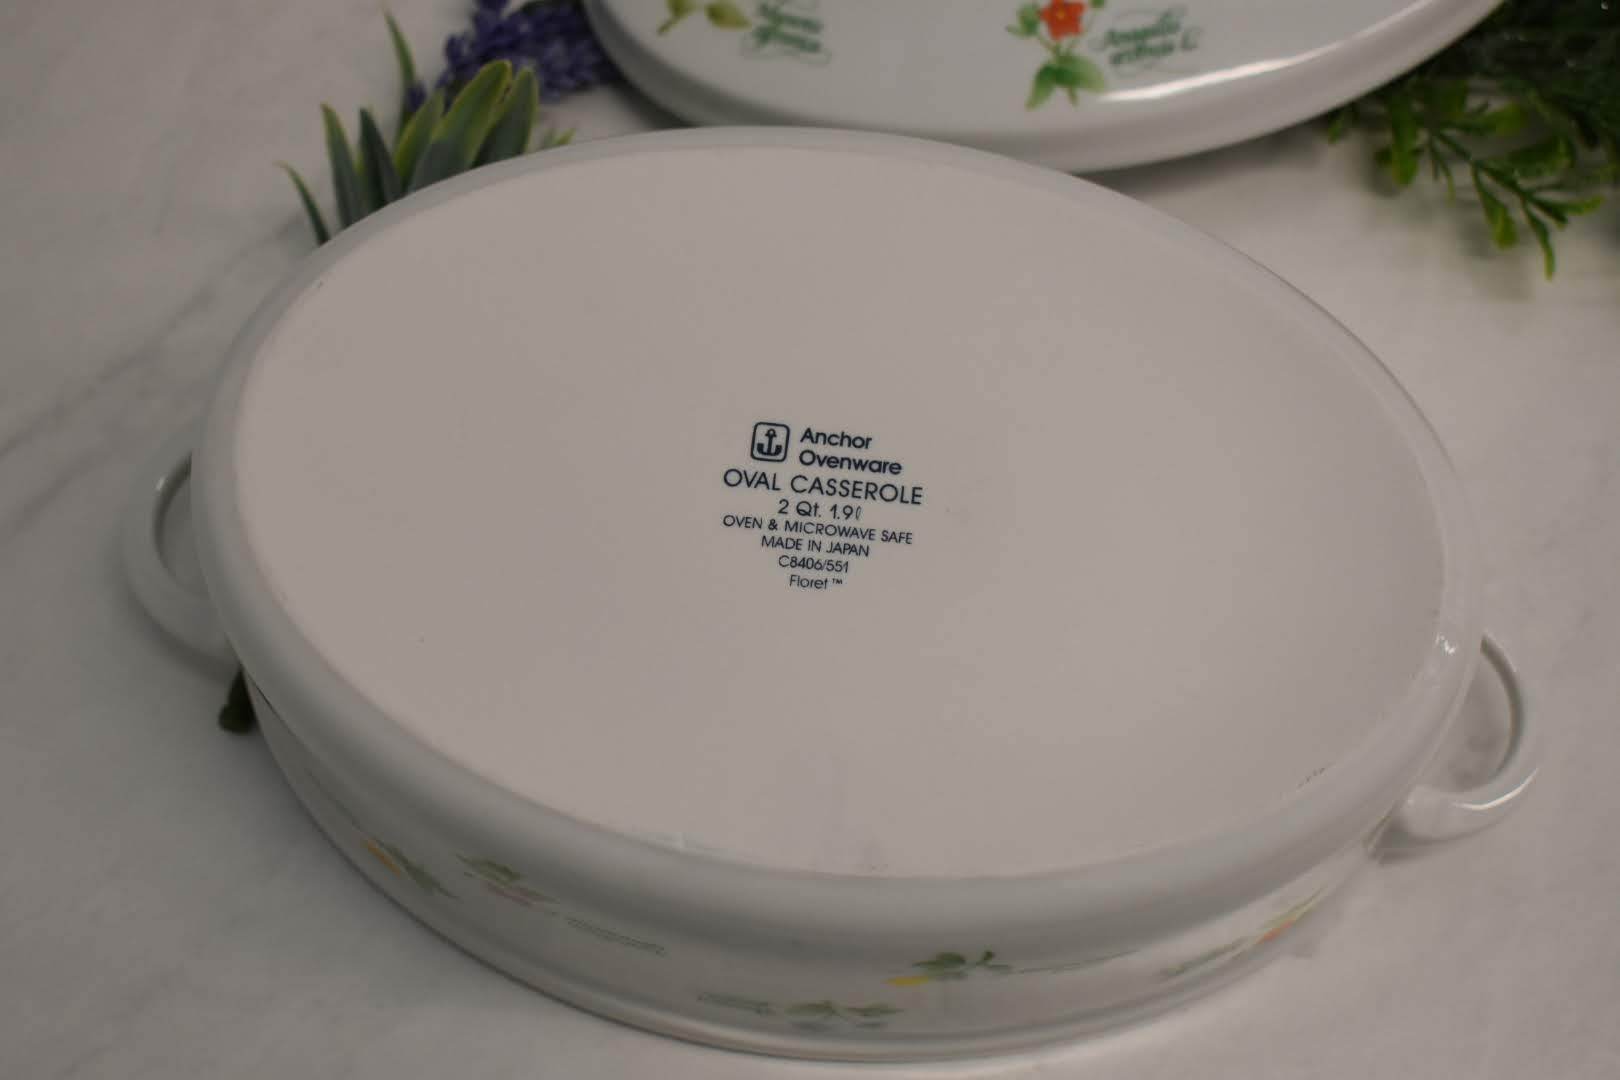 Fine Porcelain China - Botanical Floral Pattern - Oval Casserole Dish / Soufflé Dish with Lid